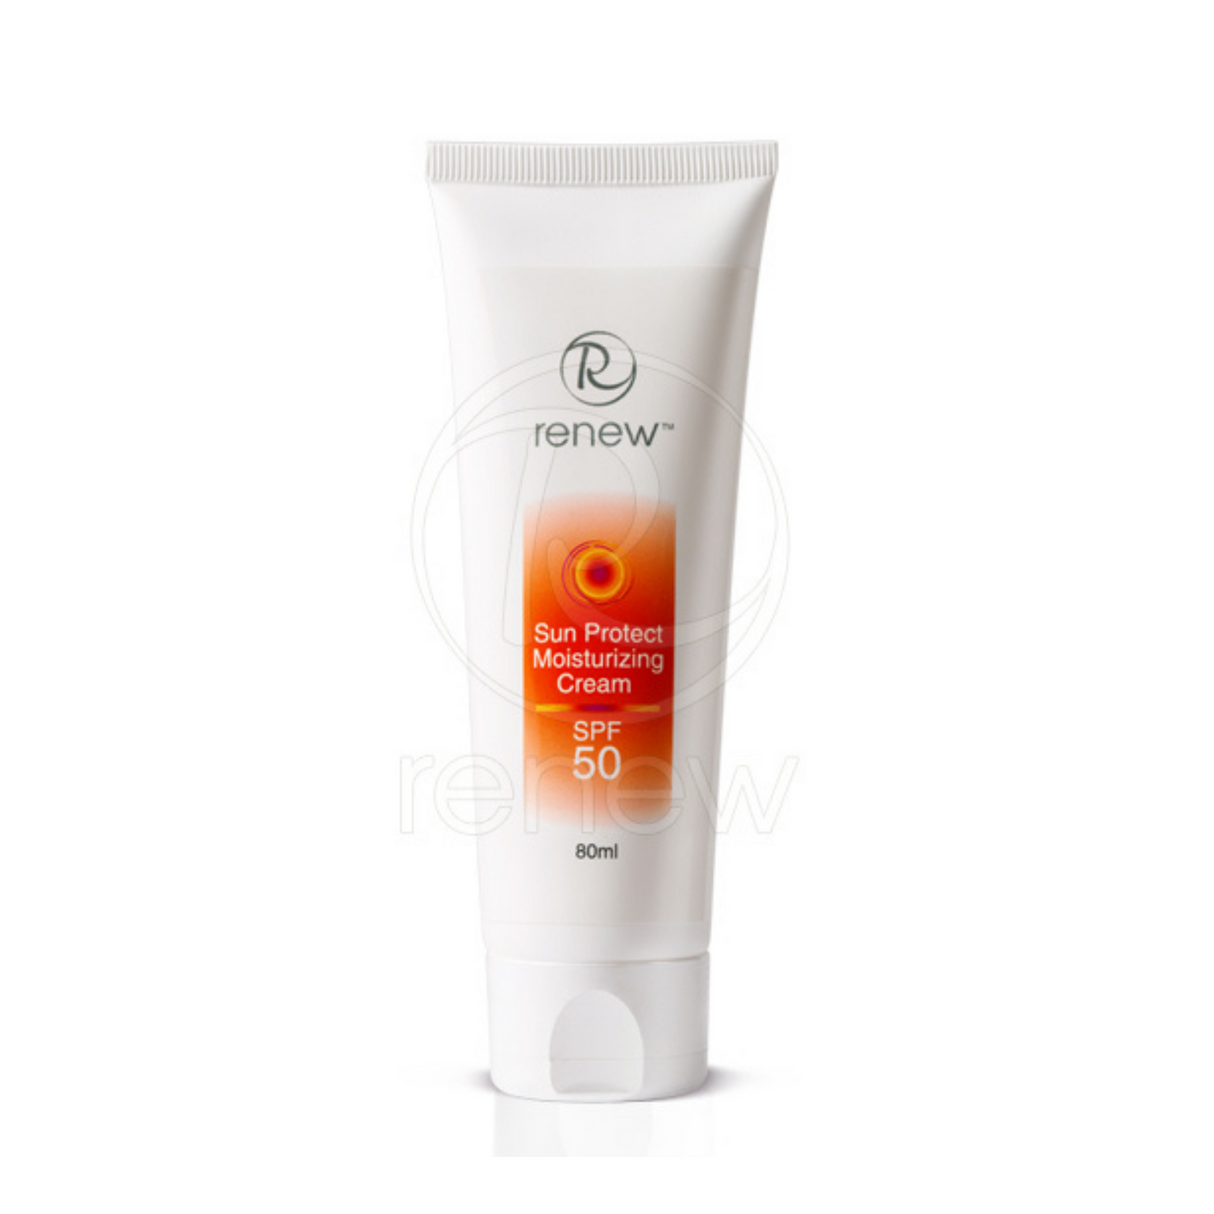 Renew Sun Protect Moisturizing Cream SPF-50 – Moisturizing sun protection cream with SPF-50